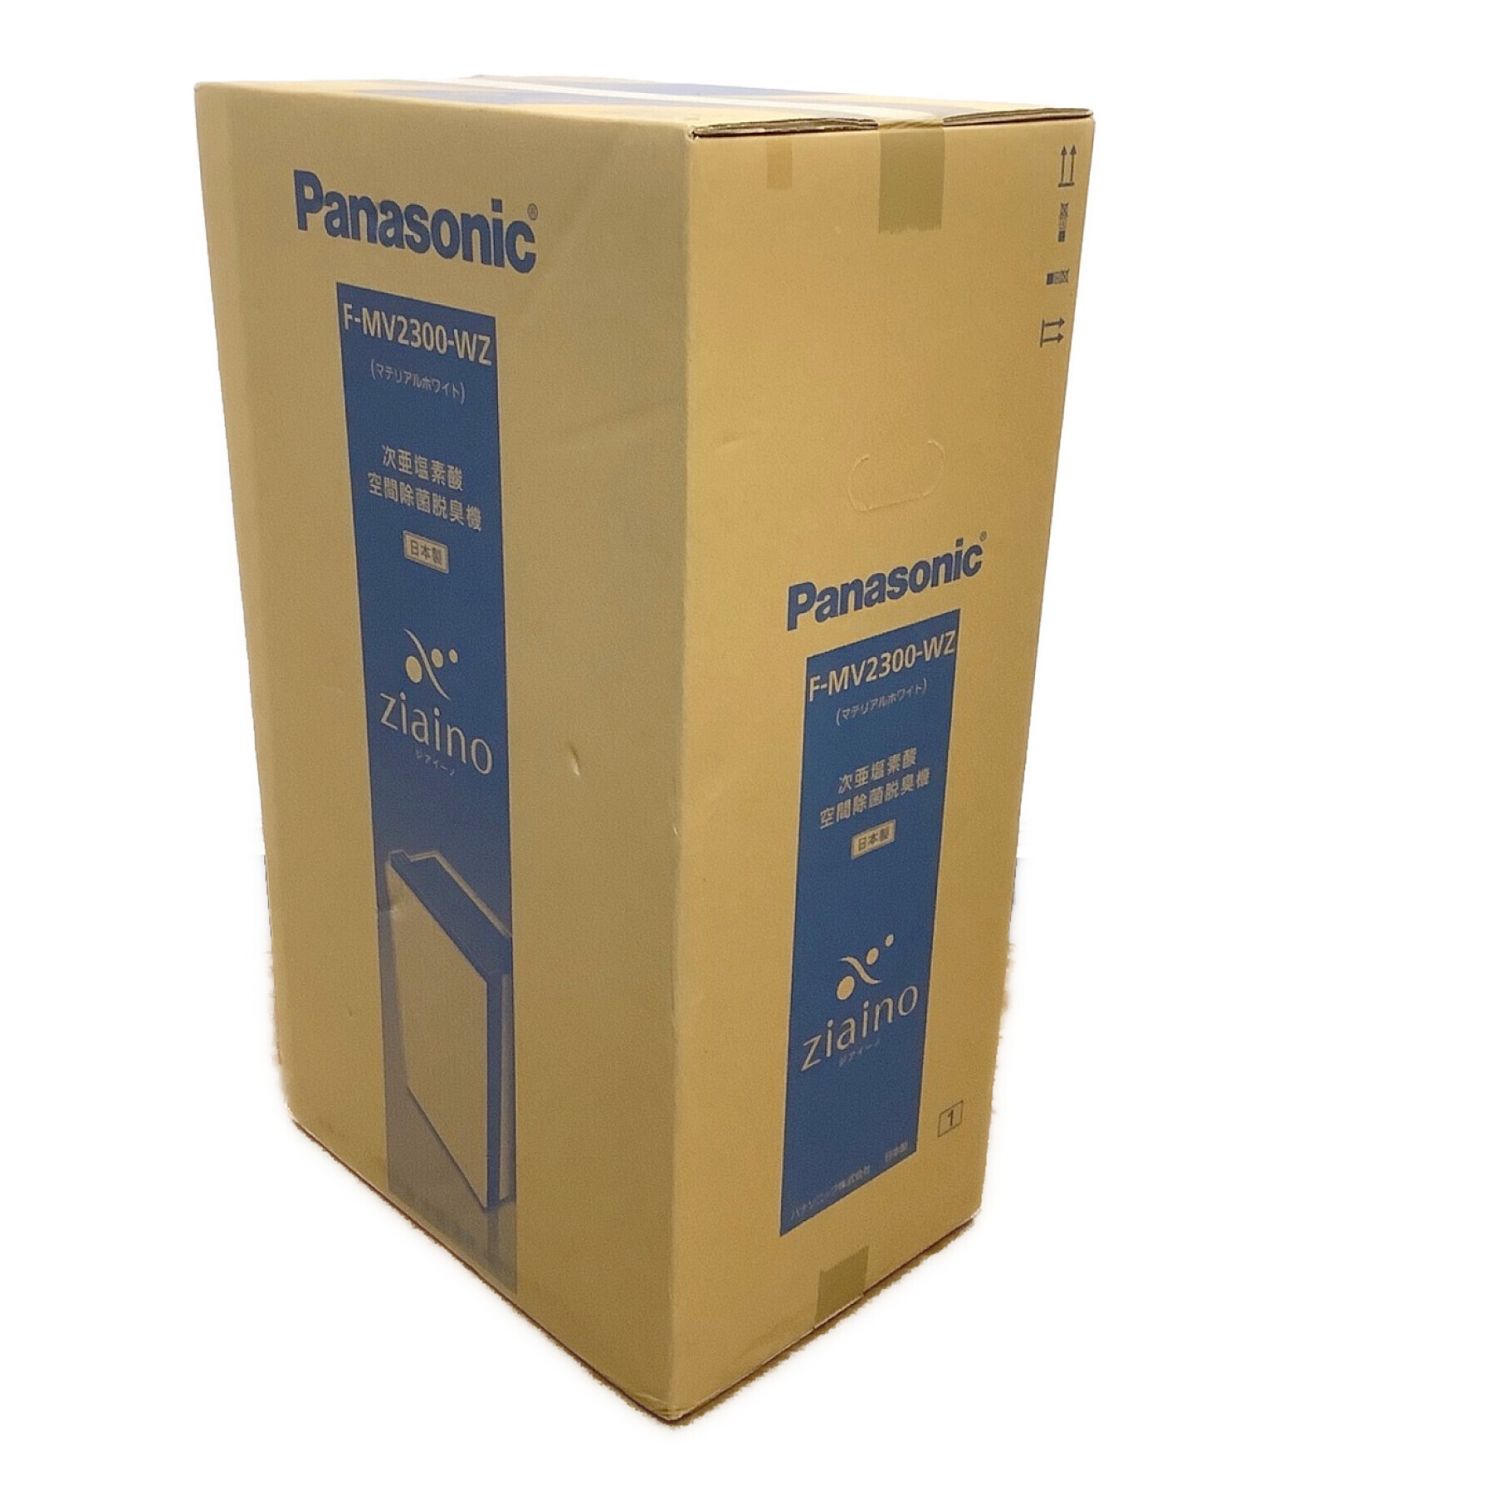 Panasonic ジアイーノ次亜塩素酸 空間除菌脱臭機 F-MV2300-W…